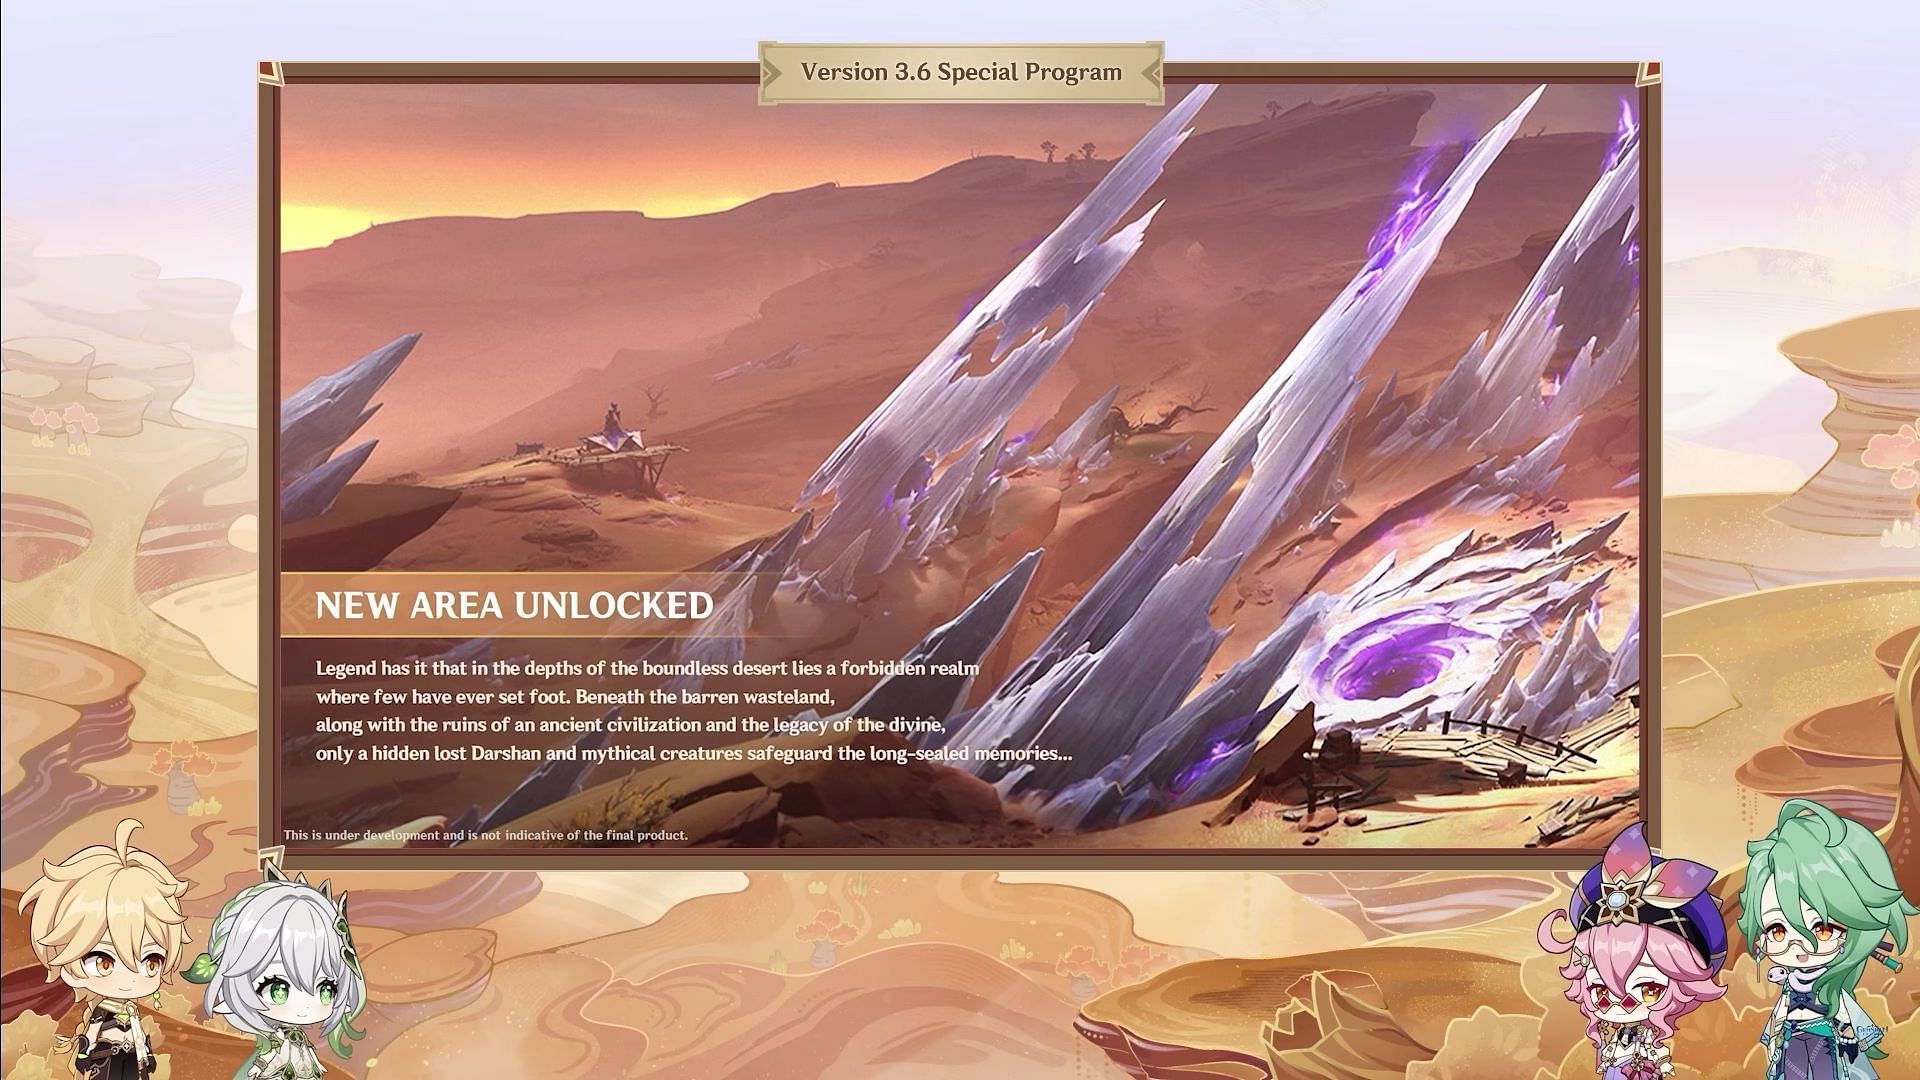 The new subarea in Sumeru will be unlocked in version 3.6 (Image via HoYoverse)